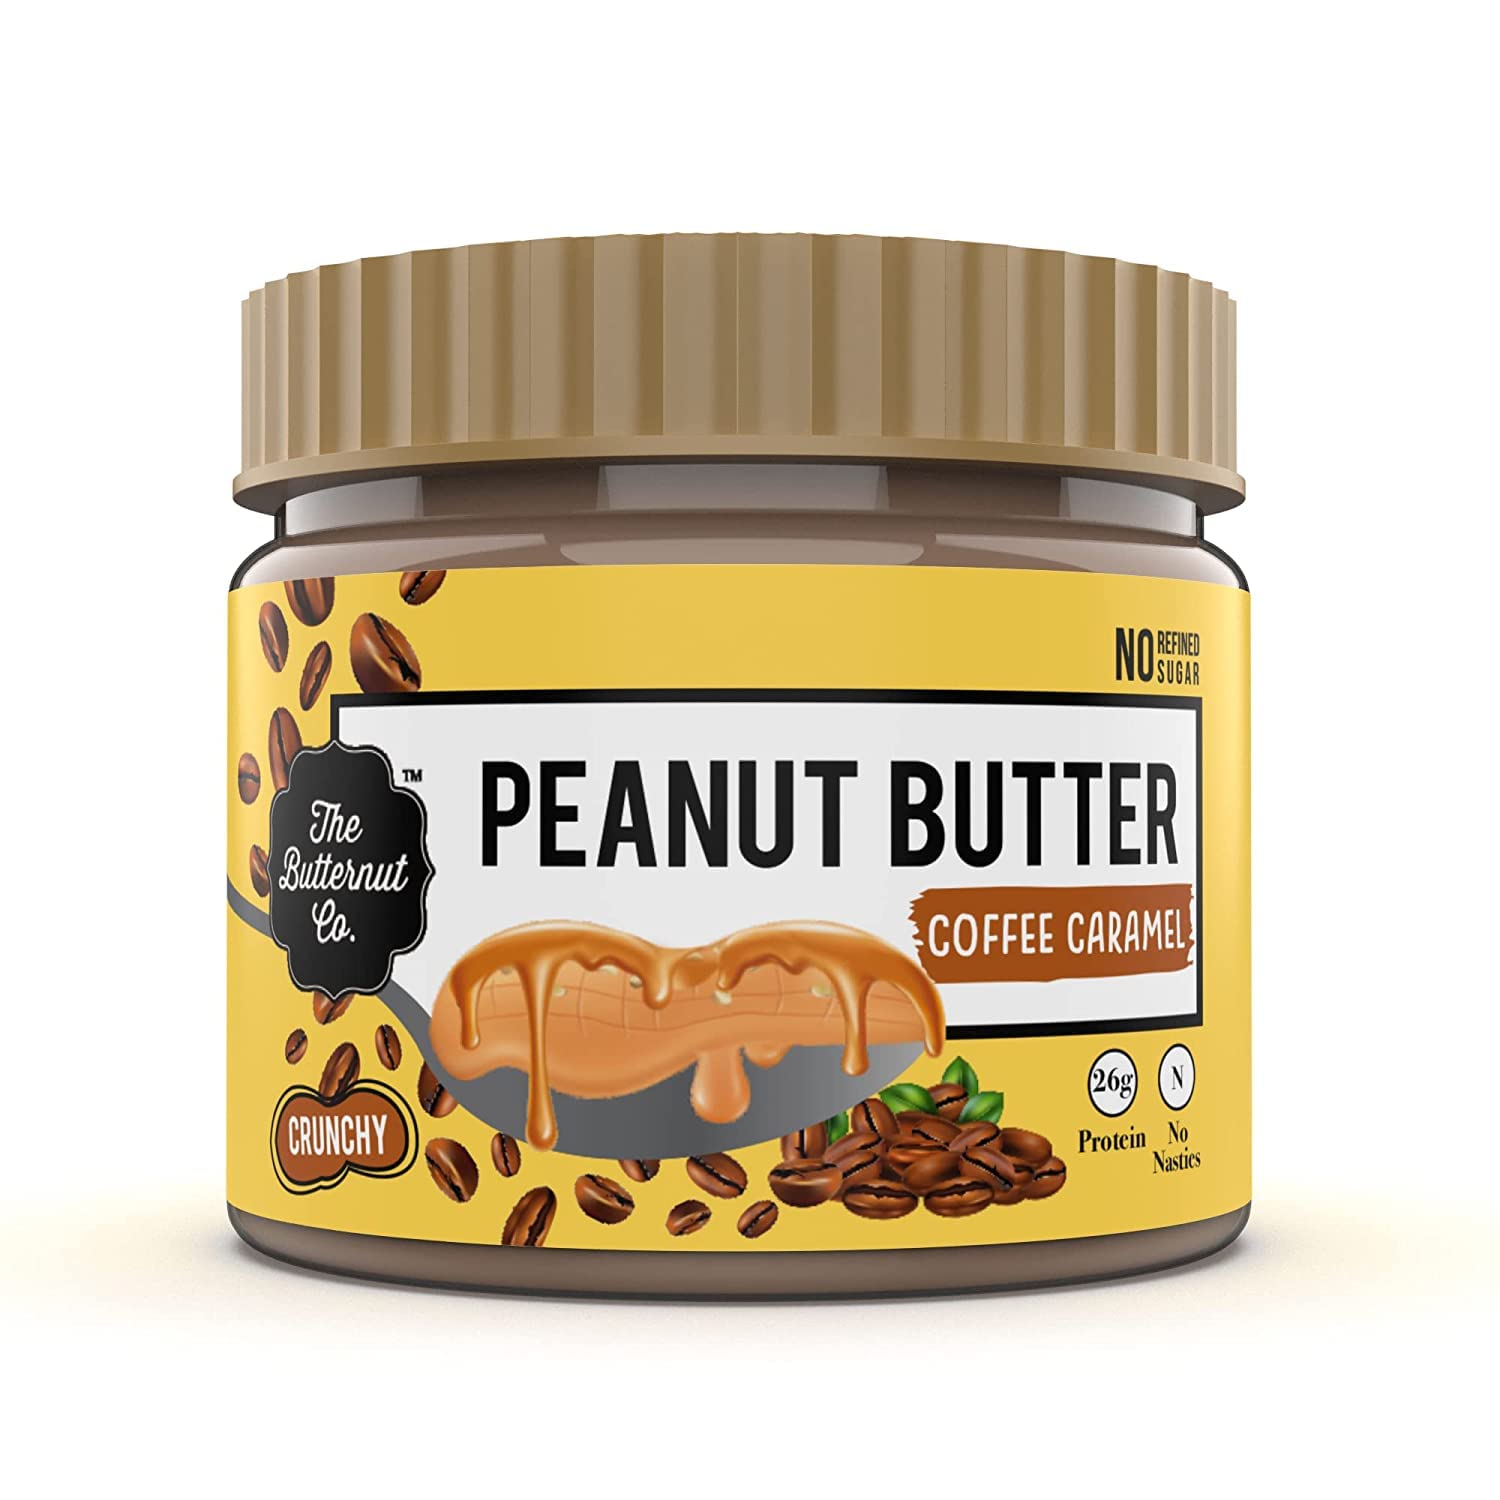 The Butternut Co. Natural Peanut Butter (Crunchy) 1kg & The Butternut Co. Coffee Caramel Peanut Butter Crunchy 340 gms | No Refined Sugar | Gluten Free | High Protein Peanut Butter